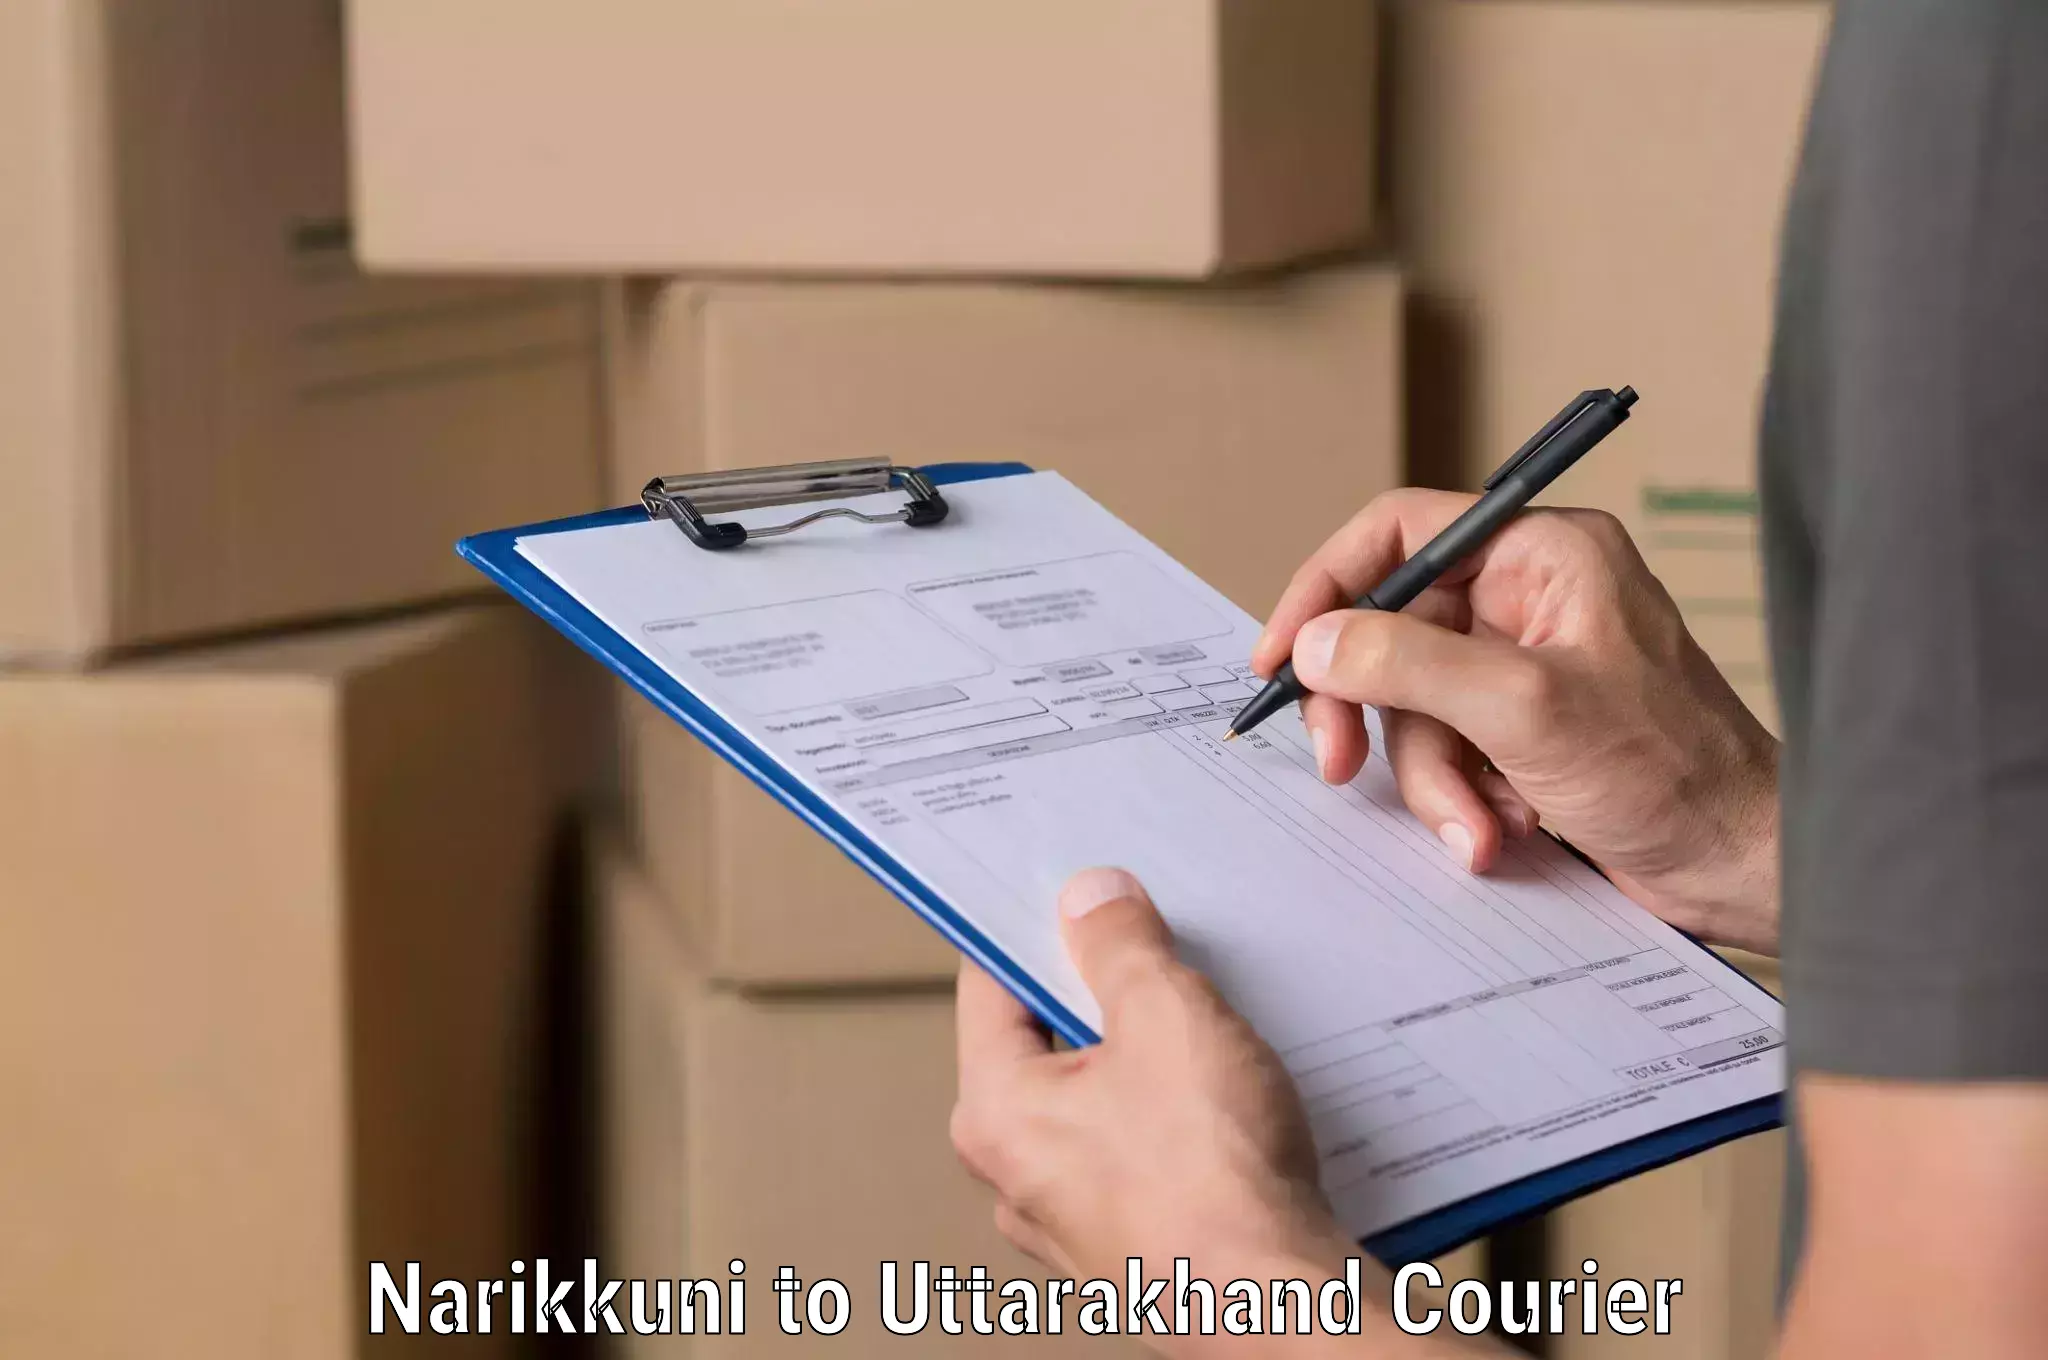 On-call courier service Narikkuni to Uttarakhand